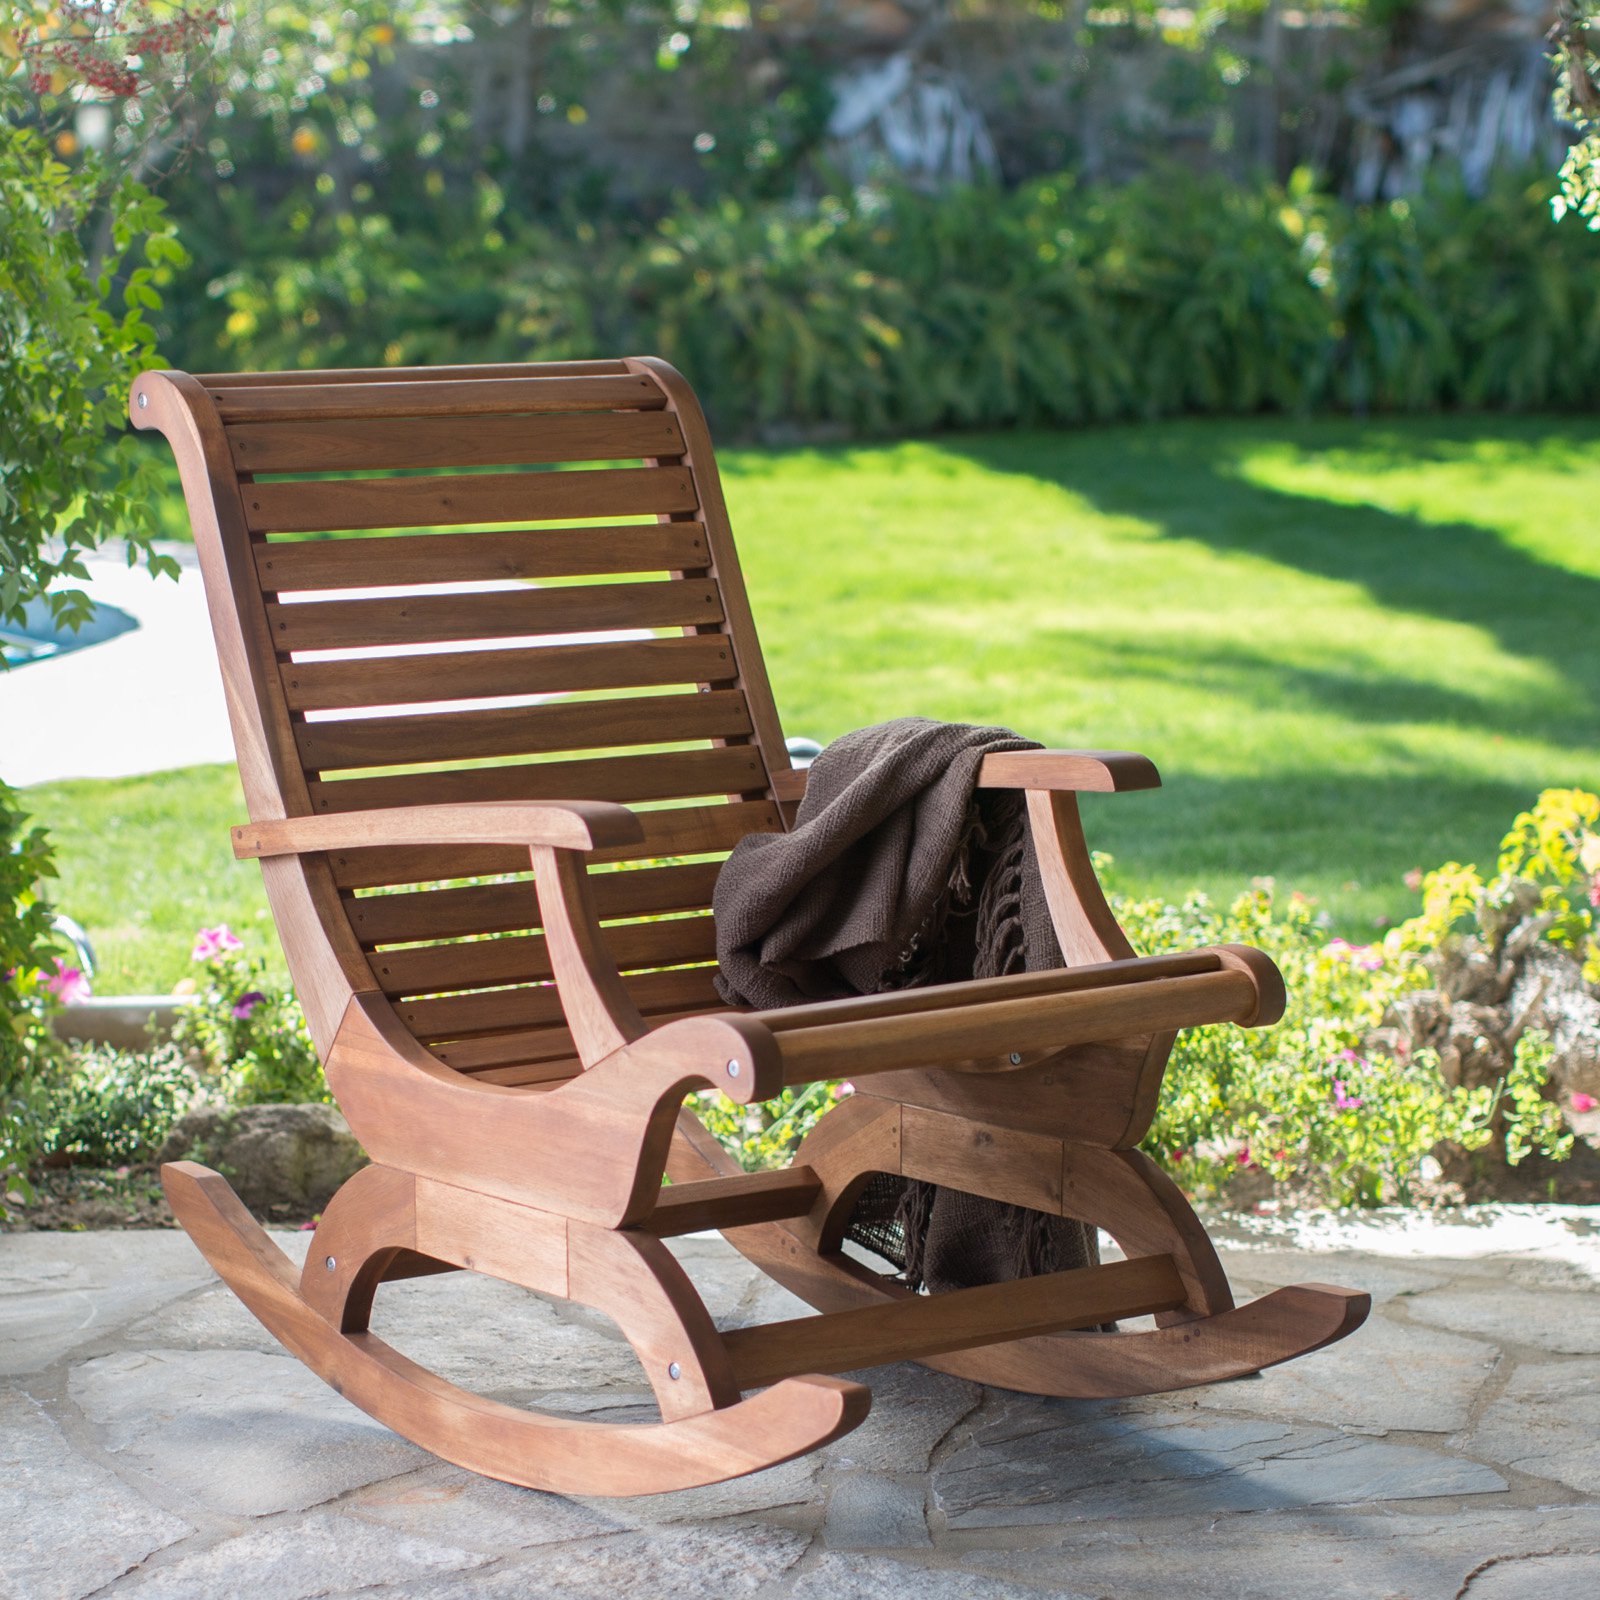 Outdoor rocking chairs Belham Living Avondale Oversized outdoor rocking chair - natural |  Hayneedle DJWSGNM